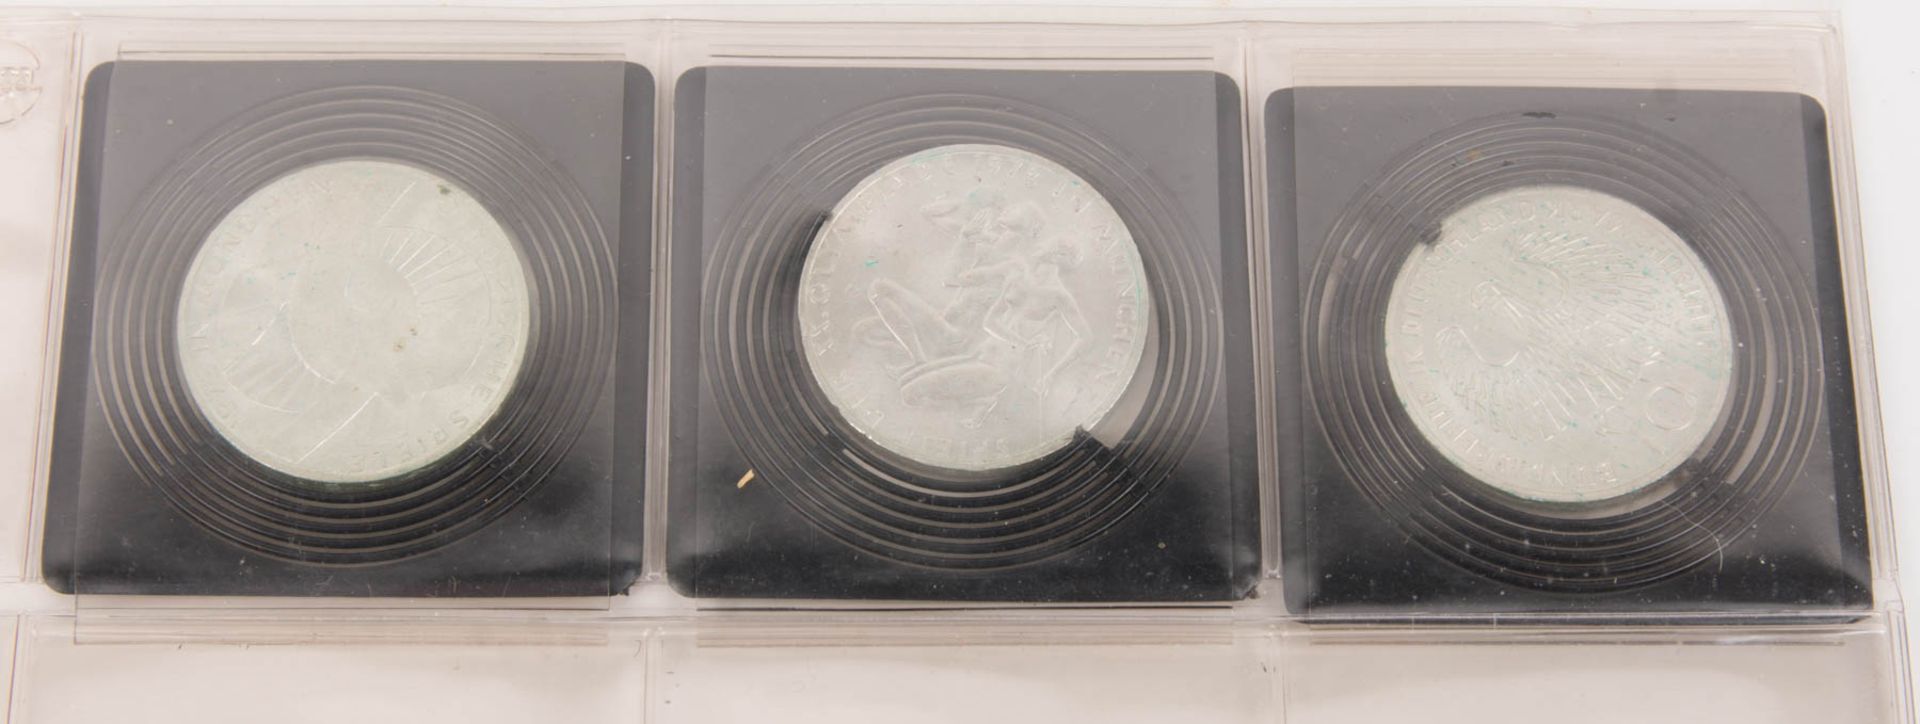 BRD, Drei 10-DM-Silbergedenkmünzen, Olympiade 1972.